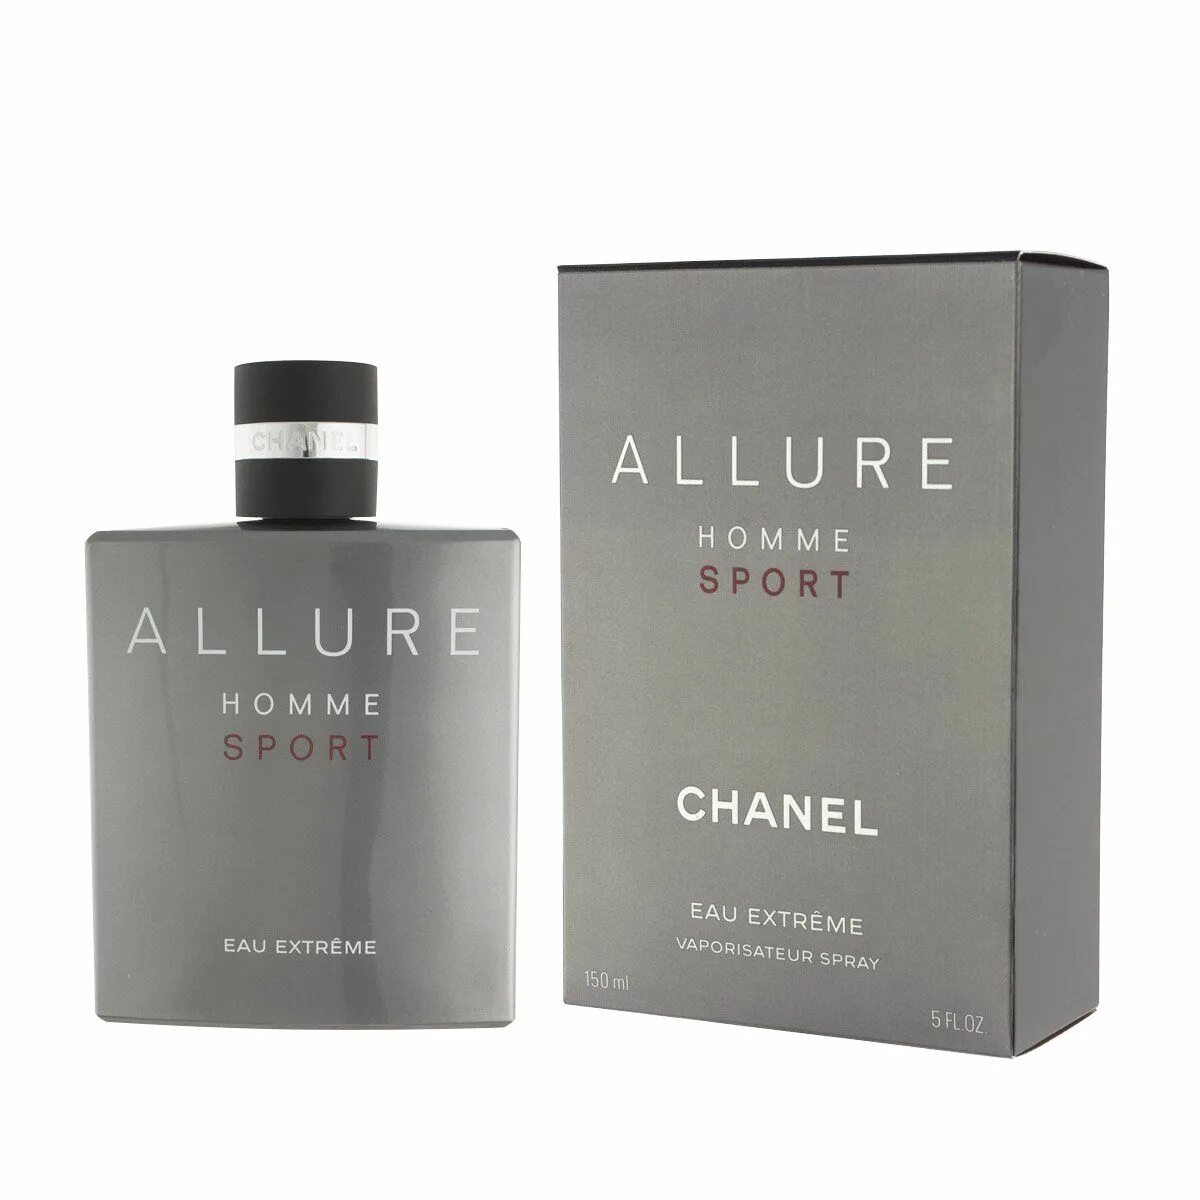 Allure homme sport eau. Chanel Allure Sport Eau extreme. Chanel Allure homme Sport extreme. Chanel Allure Sport. Chanel Allure homme Sport 150ml.